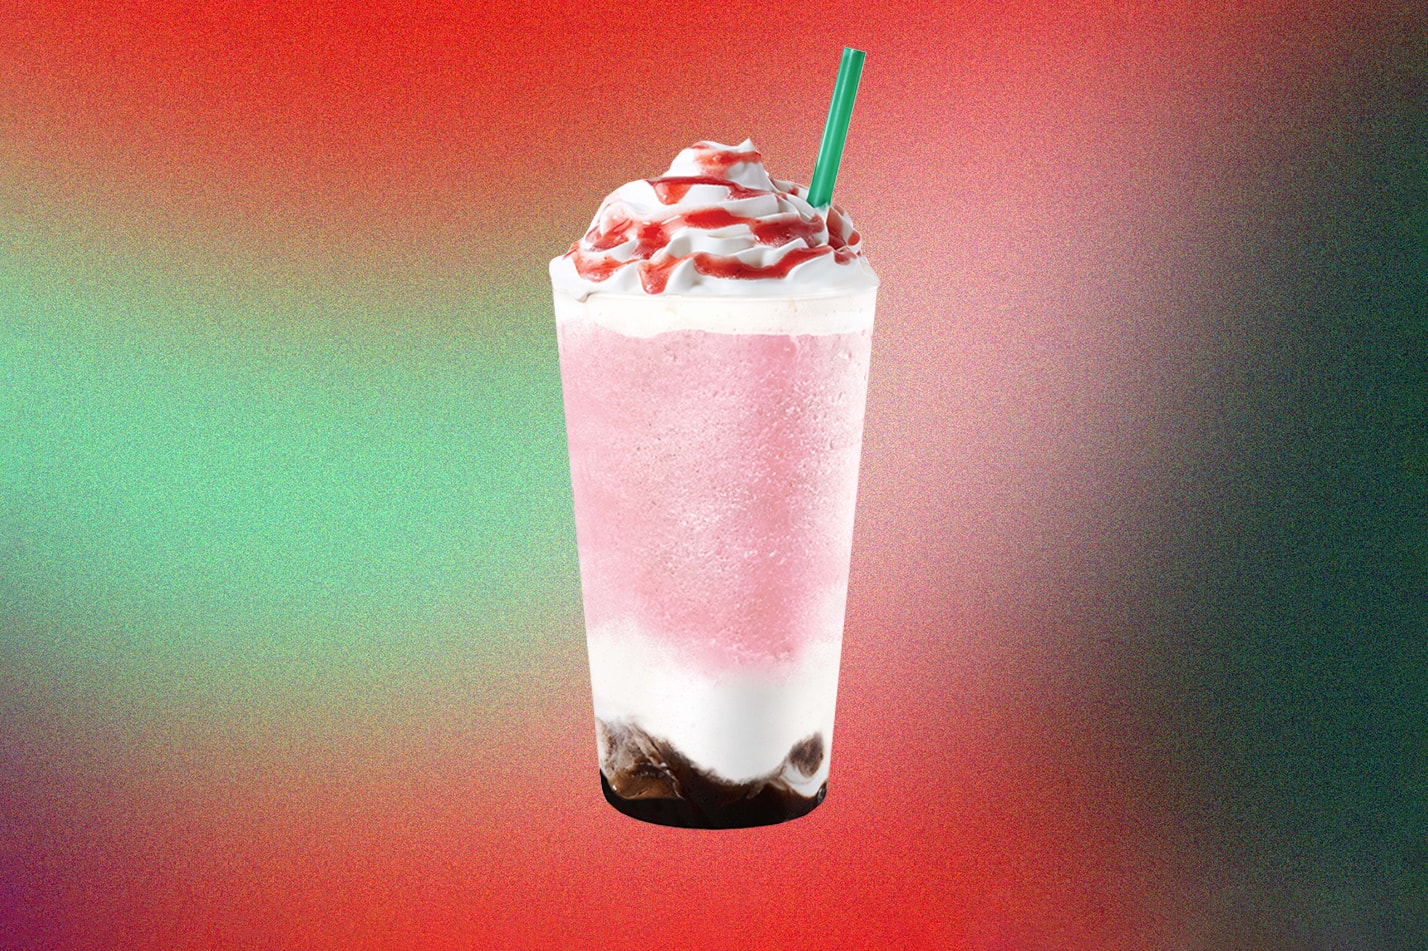 Starbucks Holiday Drinks Menu Matcha x Matcha White Chocolate Latte Frappuccino Japan